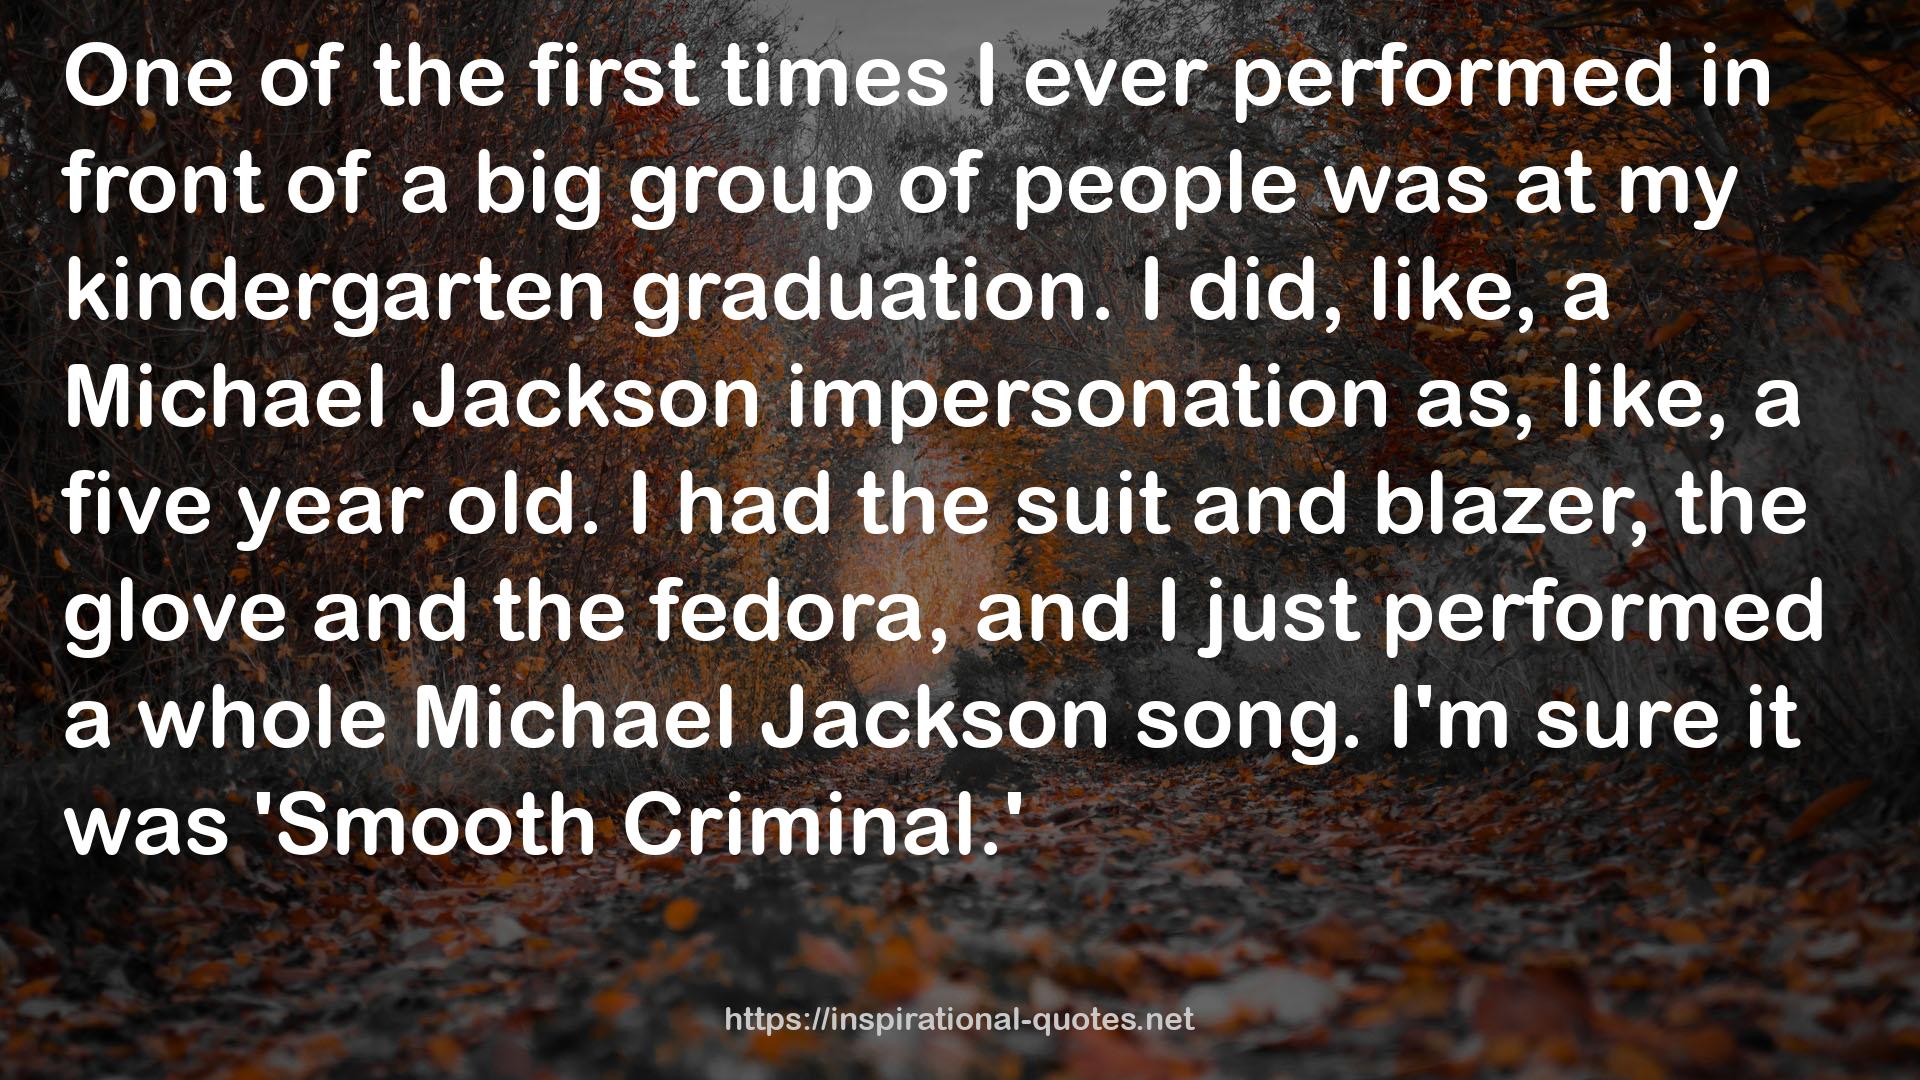 a Michael Jackson impersonation  QUOTES